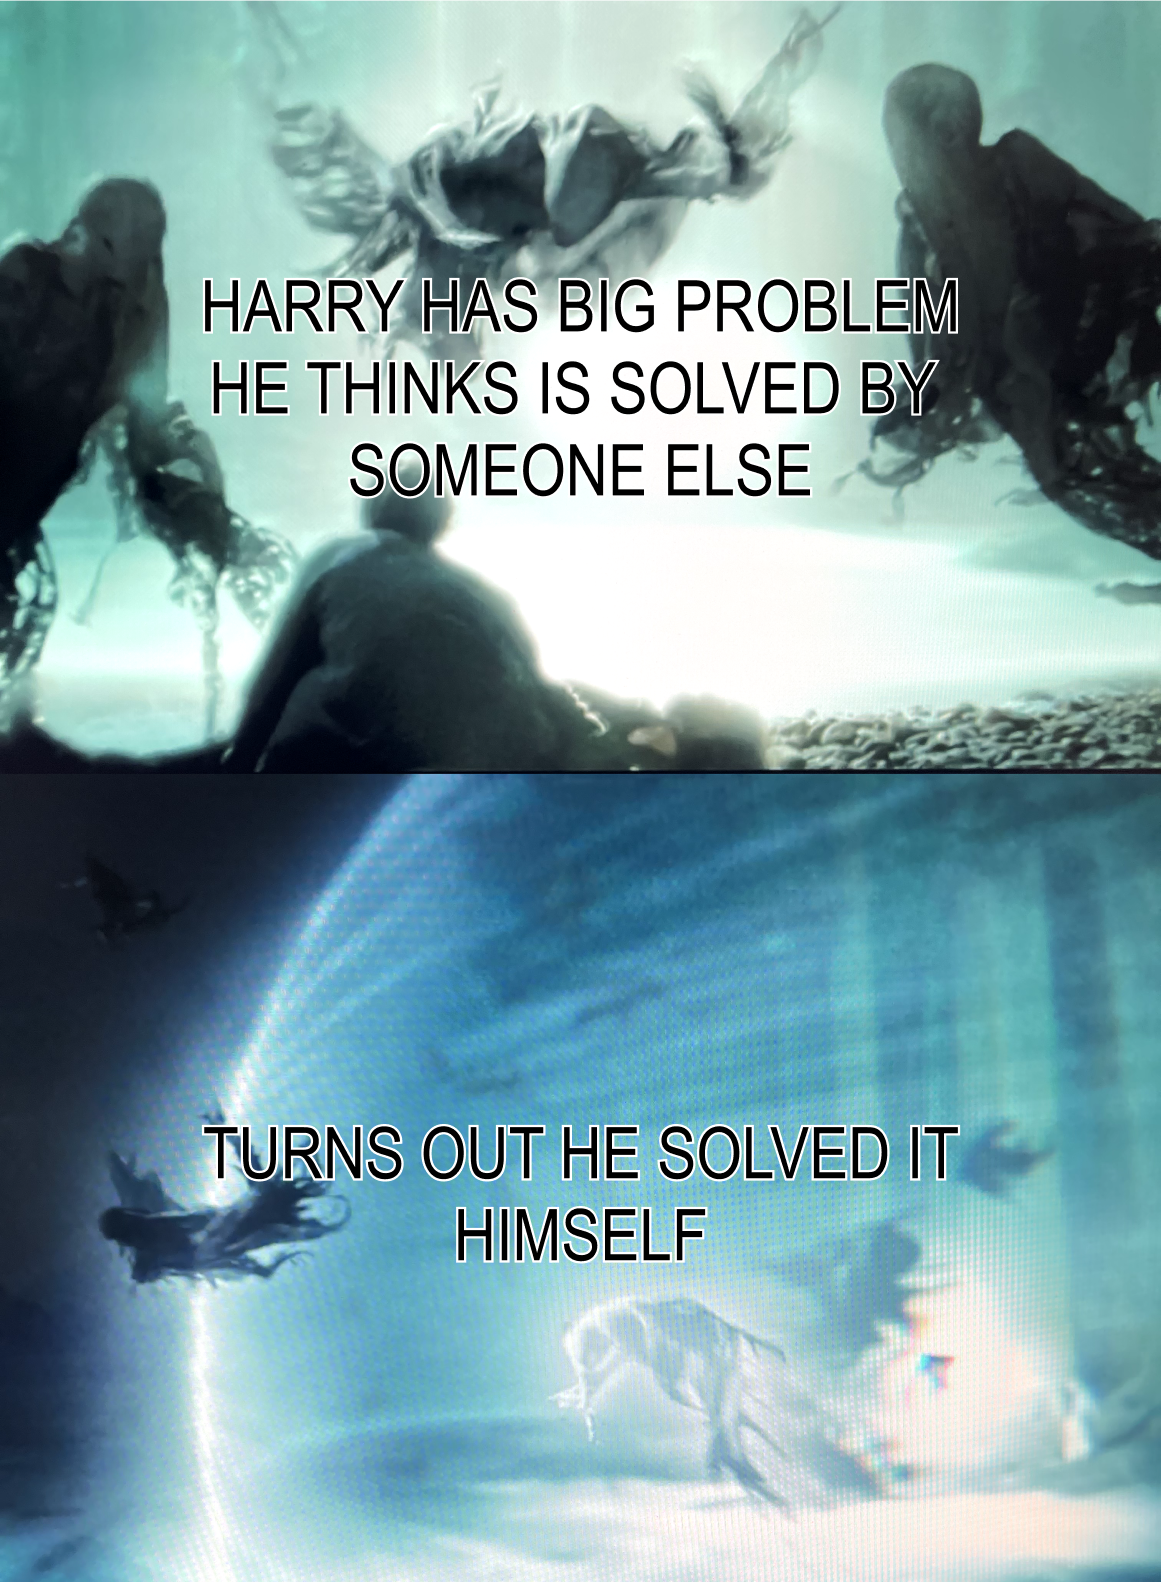 Harry saving himself